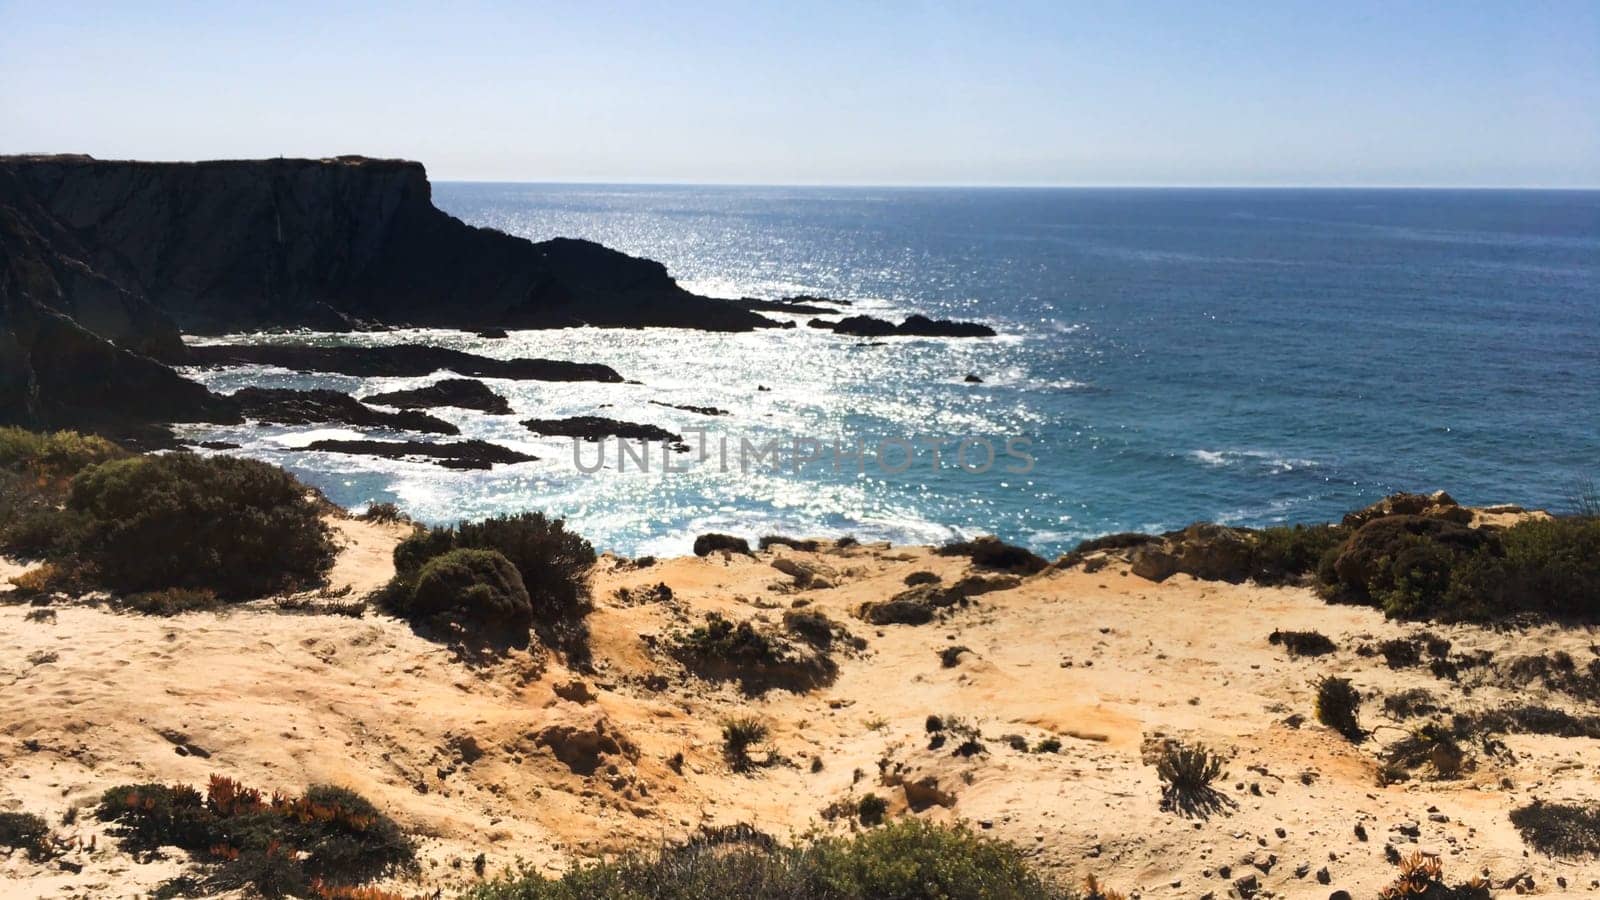 Atlantic ocean coast cliff at Sardao cape (Cabo Sardao) Alentejo Portugal.